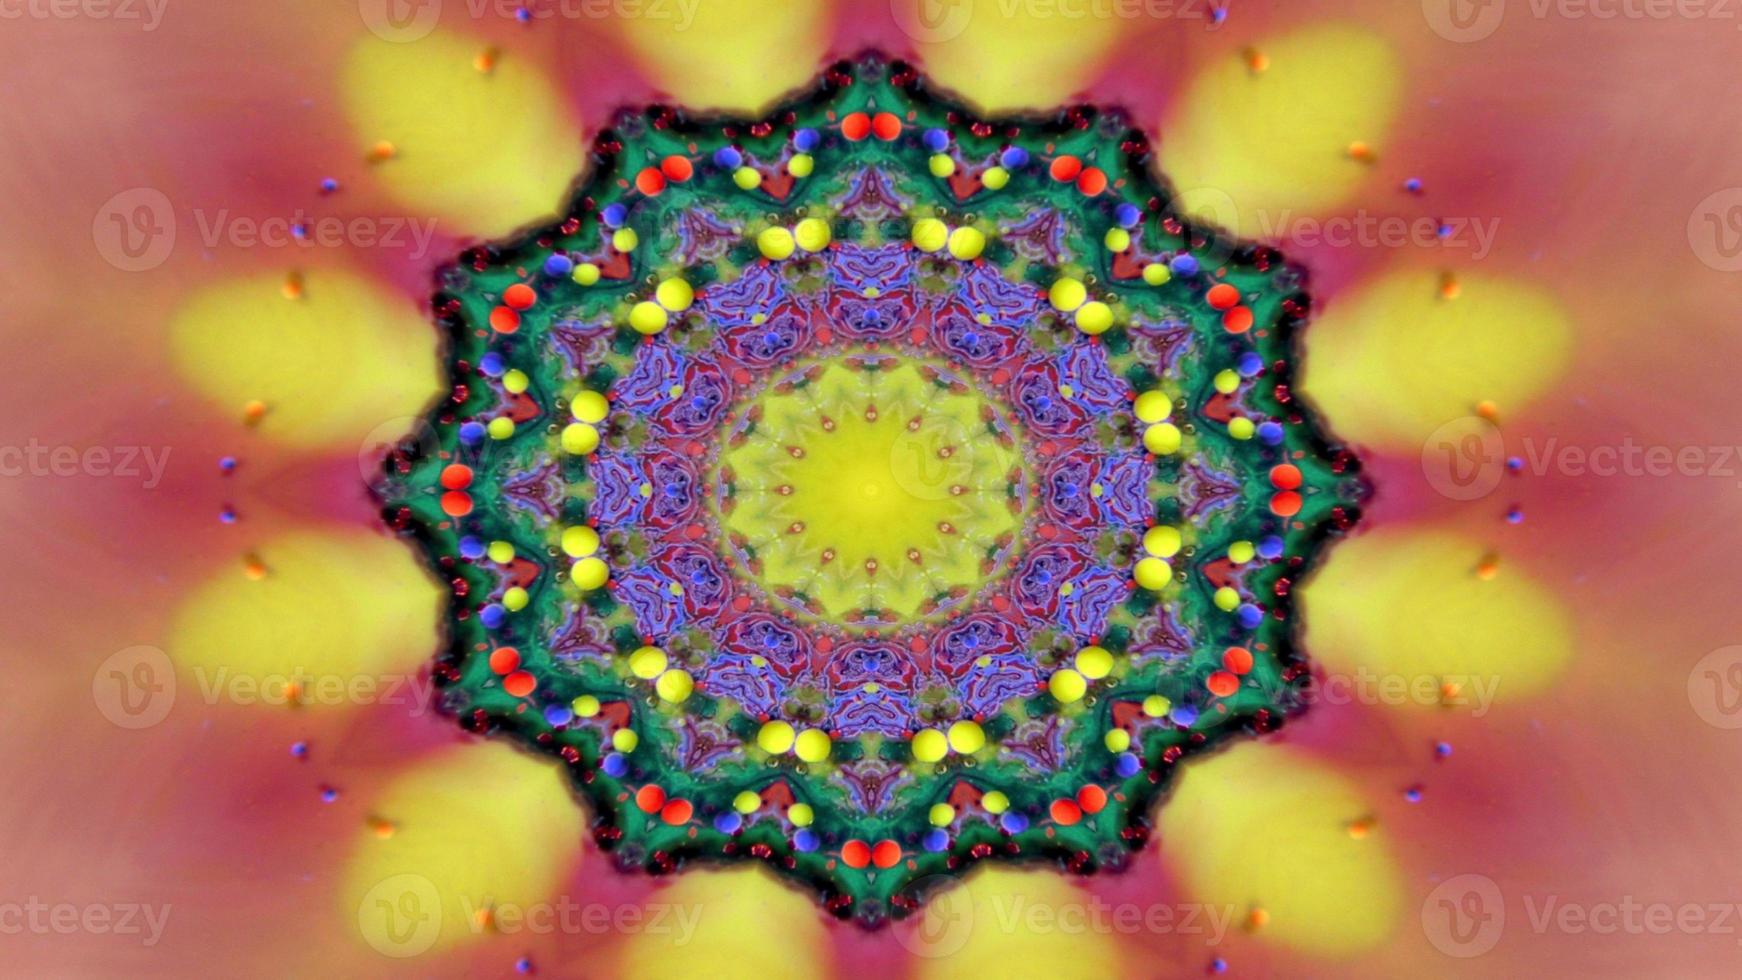 caleidoscópio simétrico colorido abstrato foto